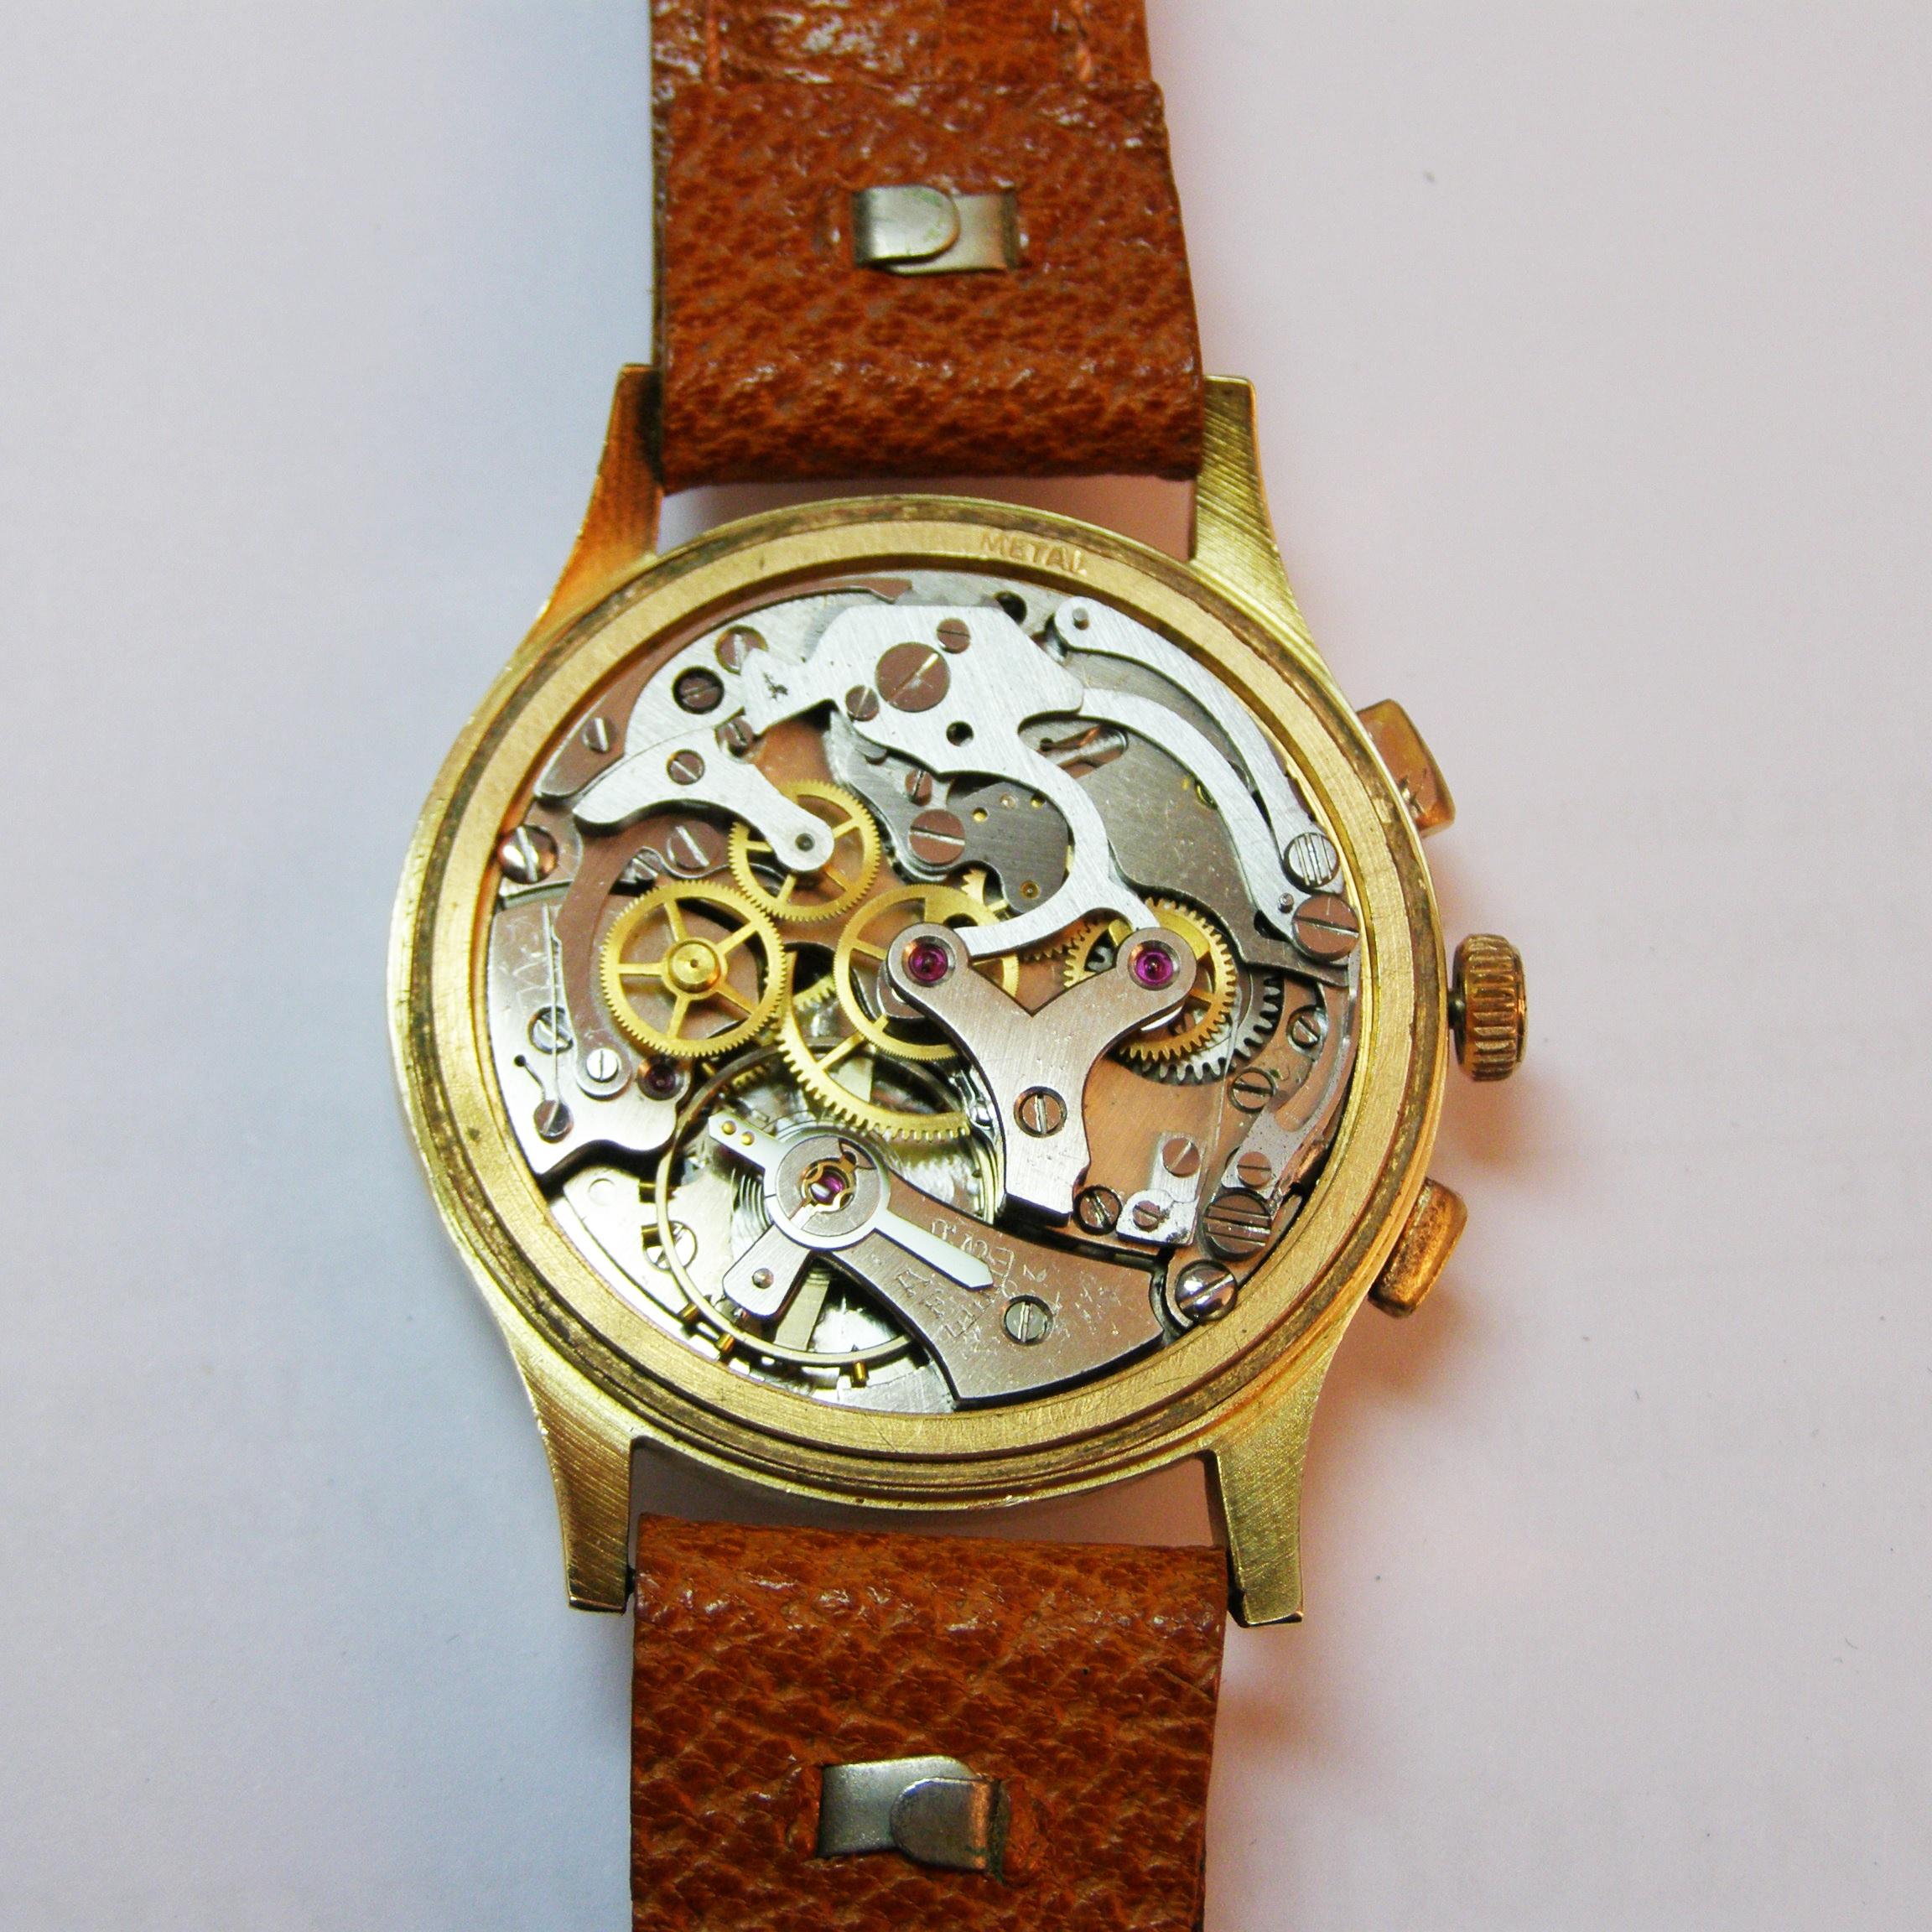 Vintage L.A. Leuba Yellow Rose Gold Chronograph Manual Wind Watch 1